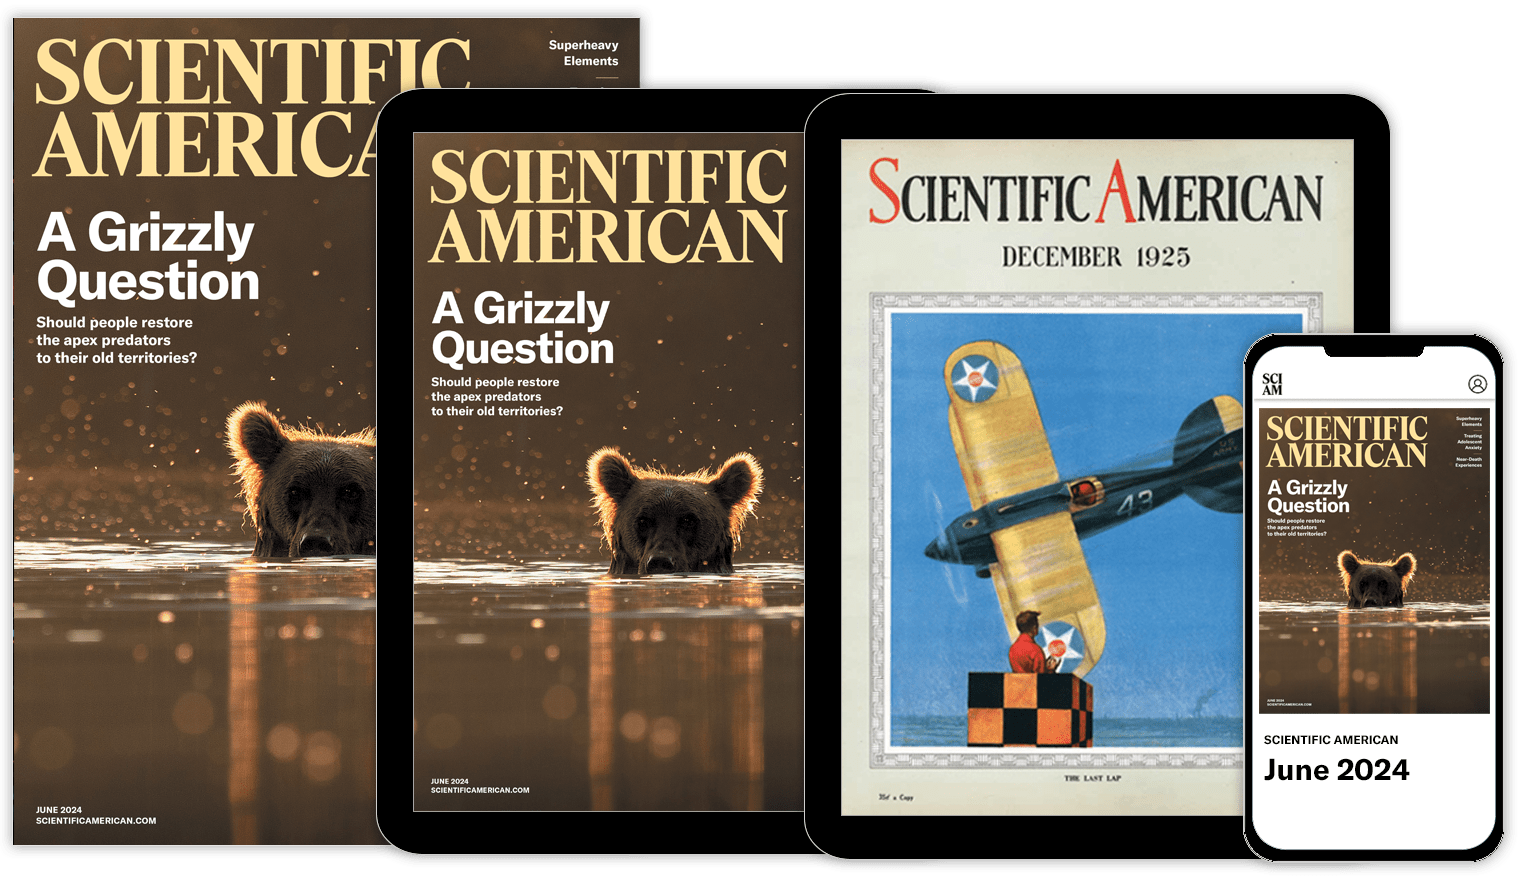 Scientific American publications in print & digital formats